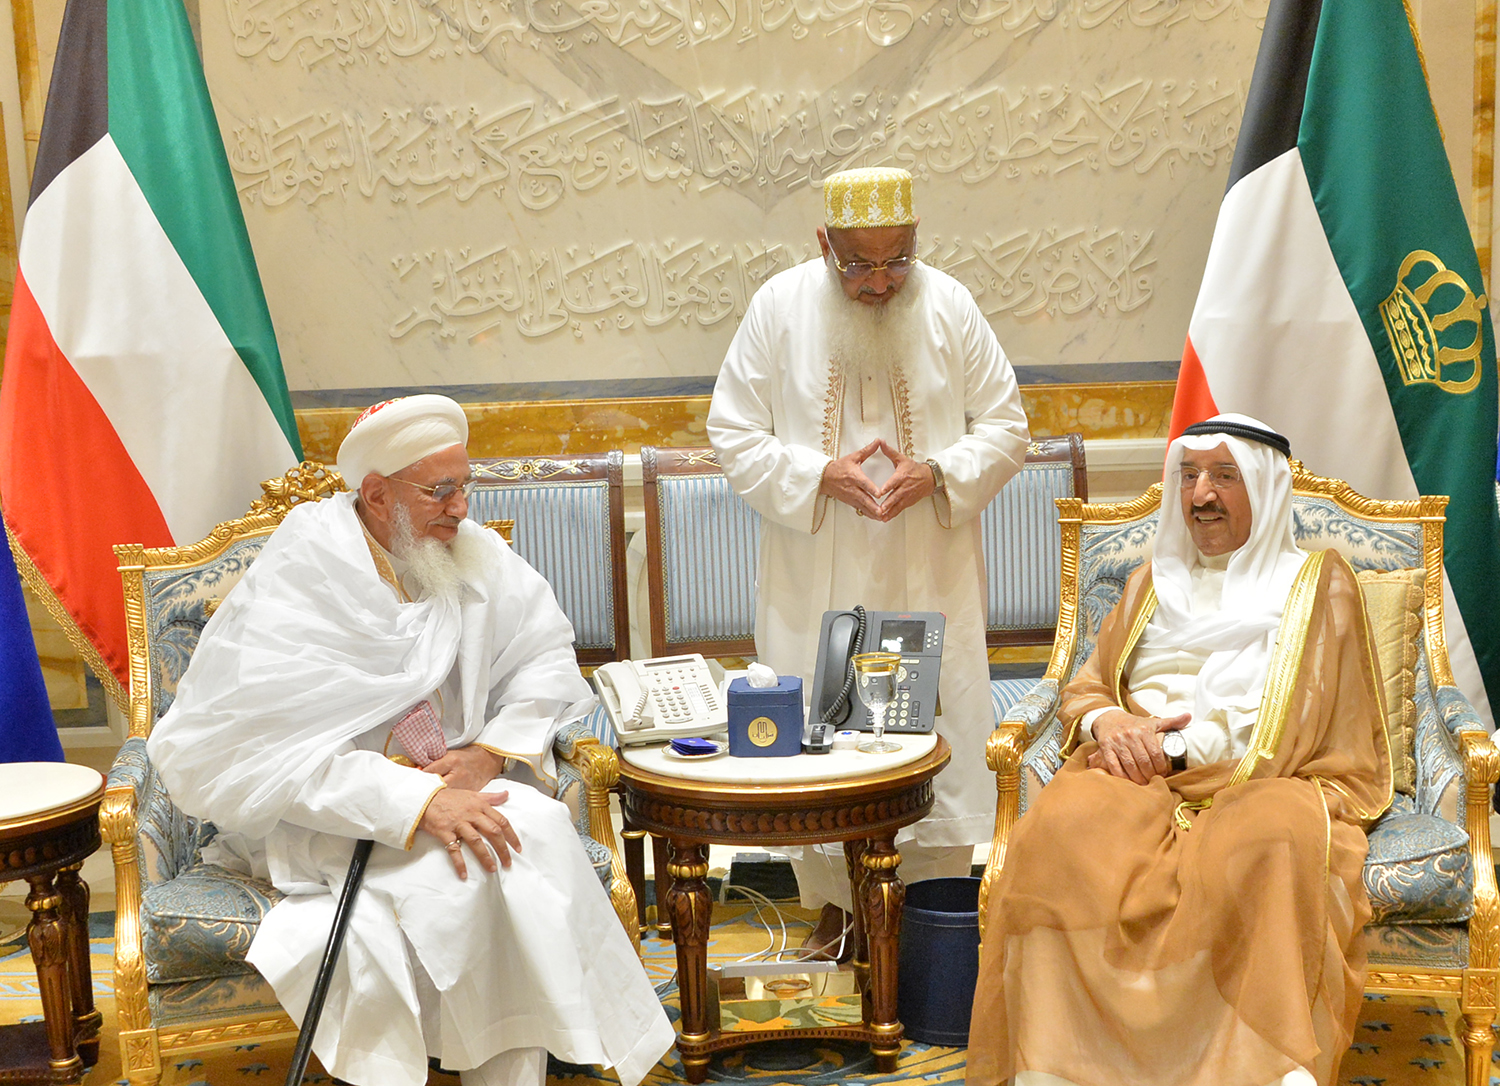 His Highness the Amir Sheikh Sabah Al-Ahmad Al-Jaber Al-Sabah received the visiting Sultan ul-Bohra Dr. Mufaddal Saifuddin